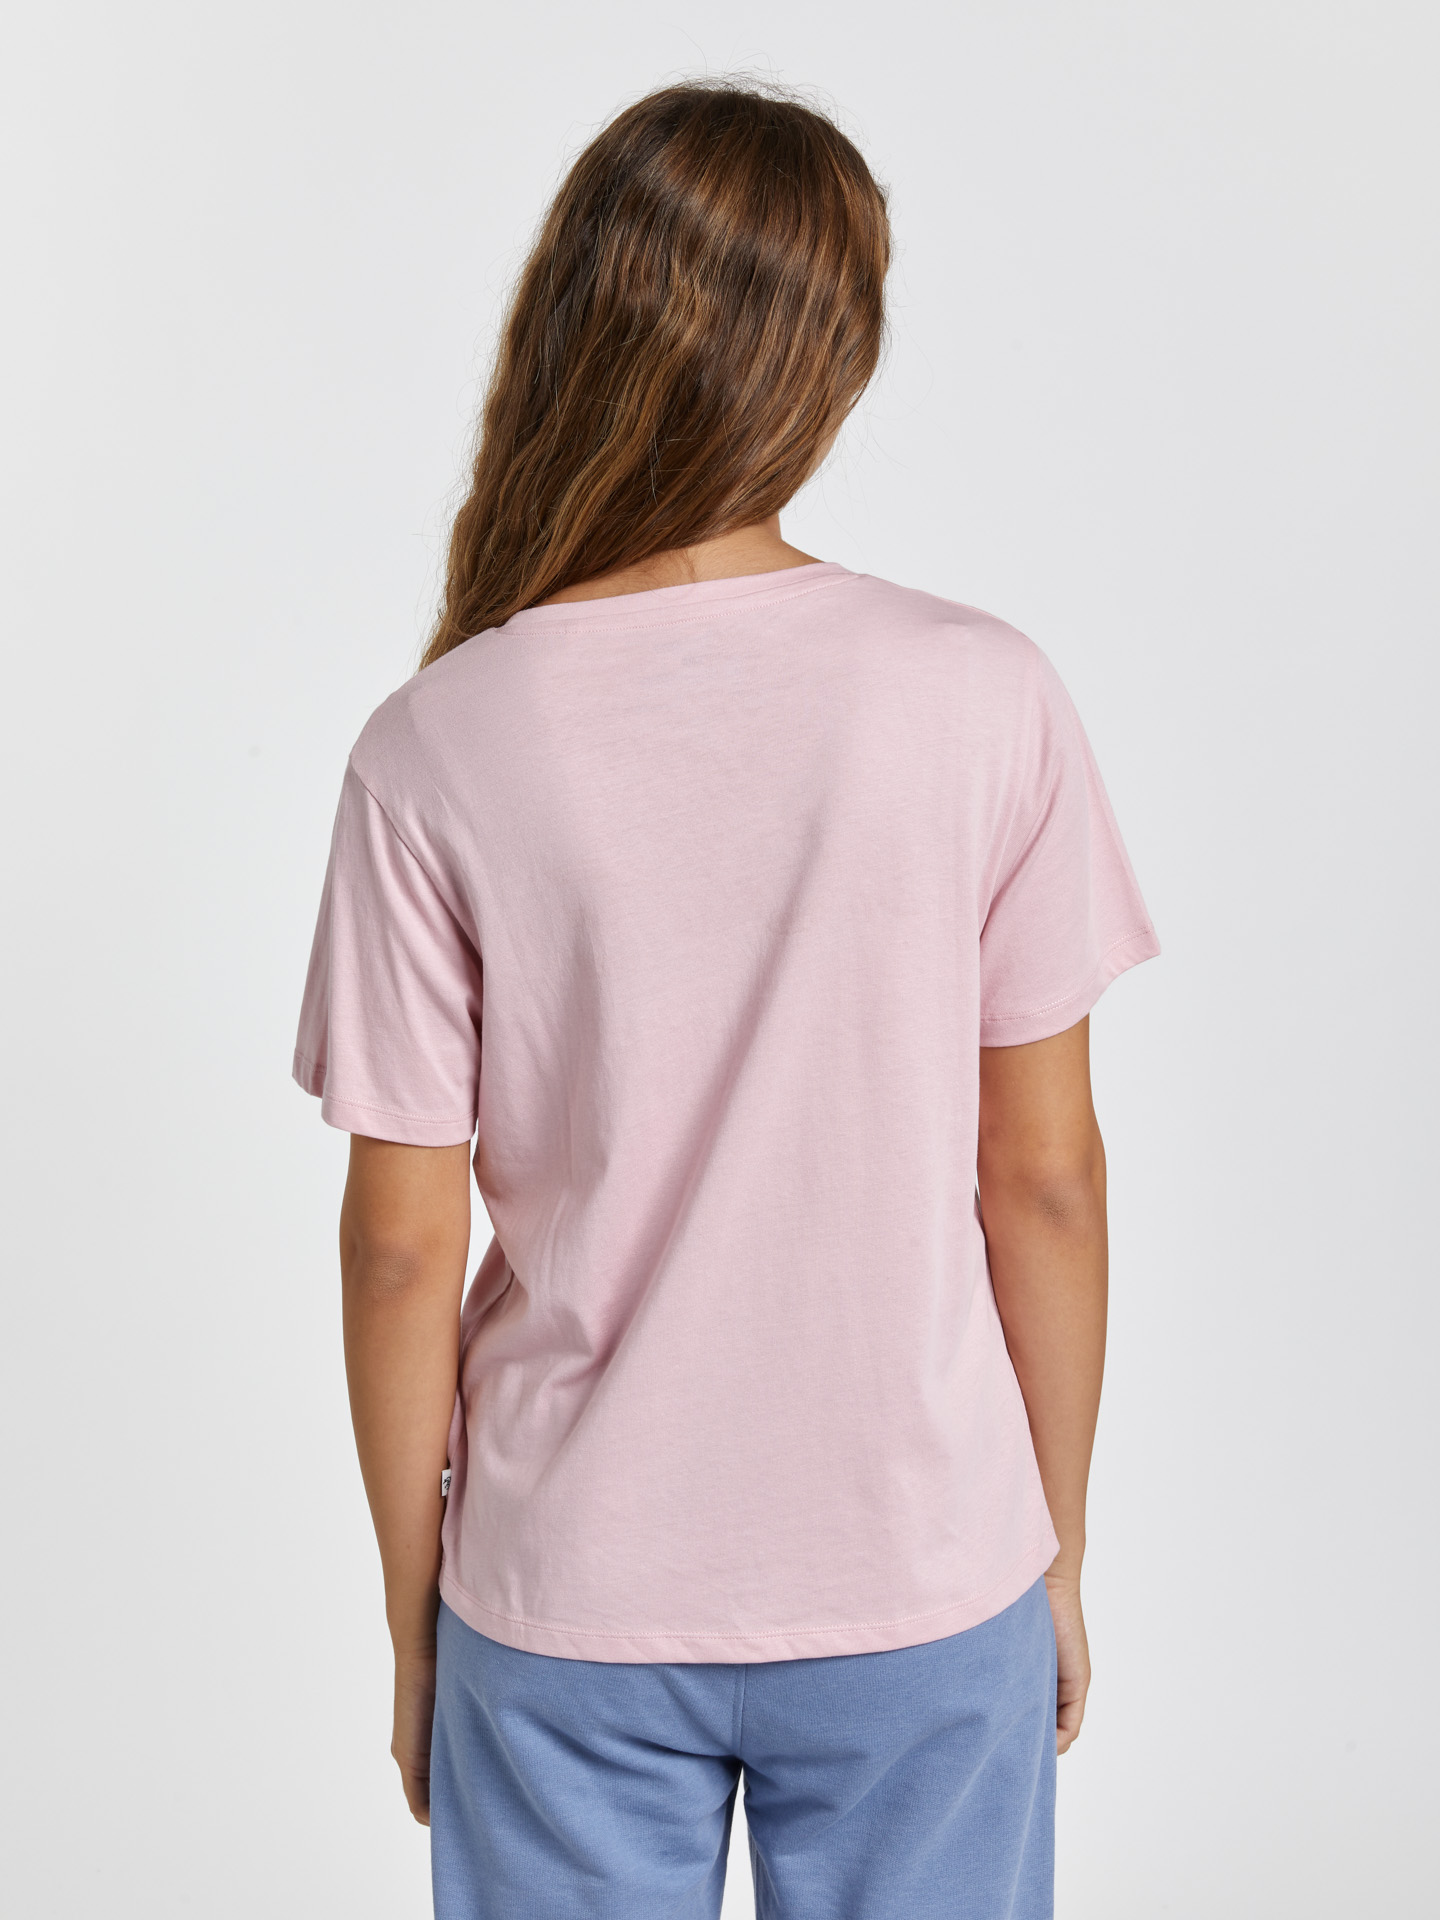 T-Shirt Light Pink Casual Woman